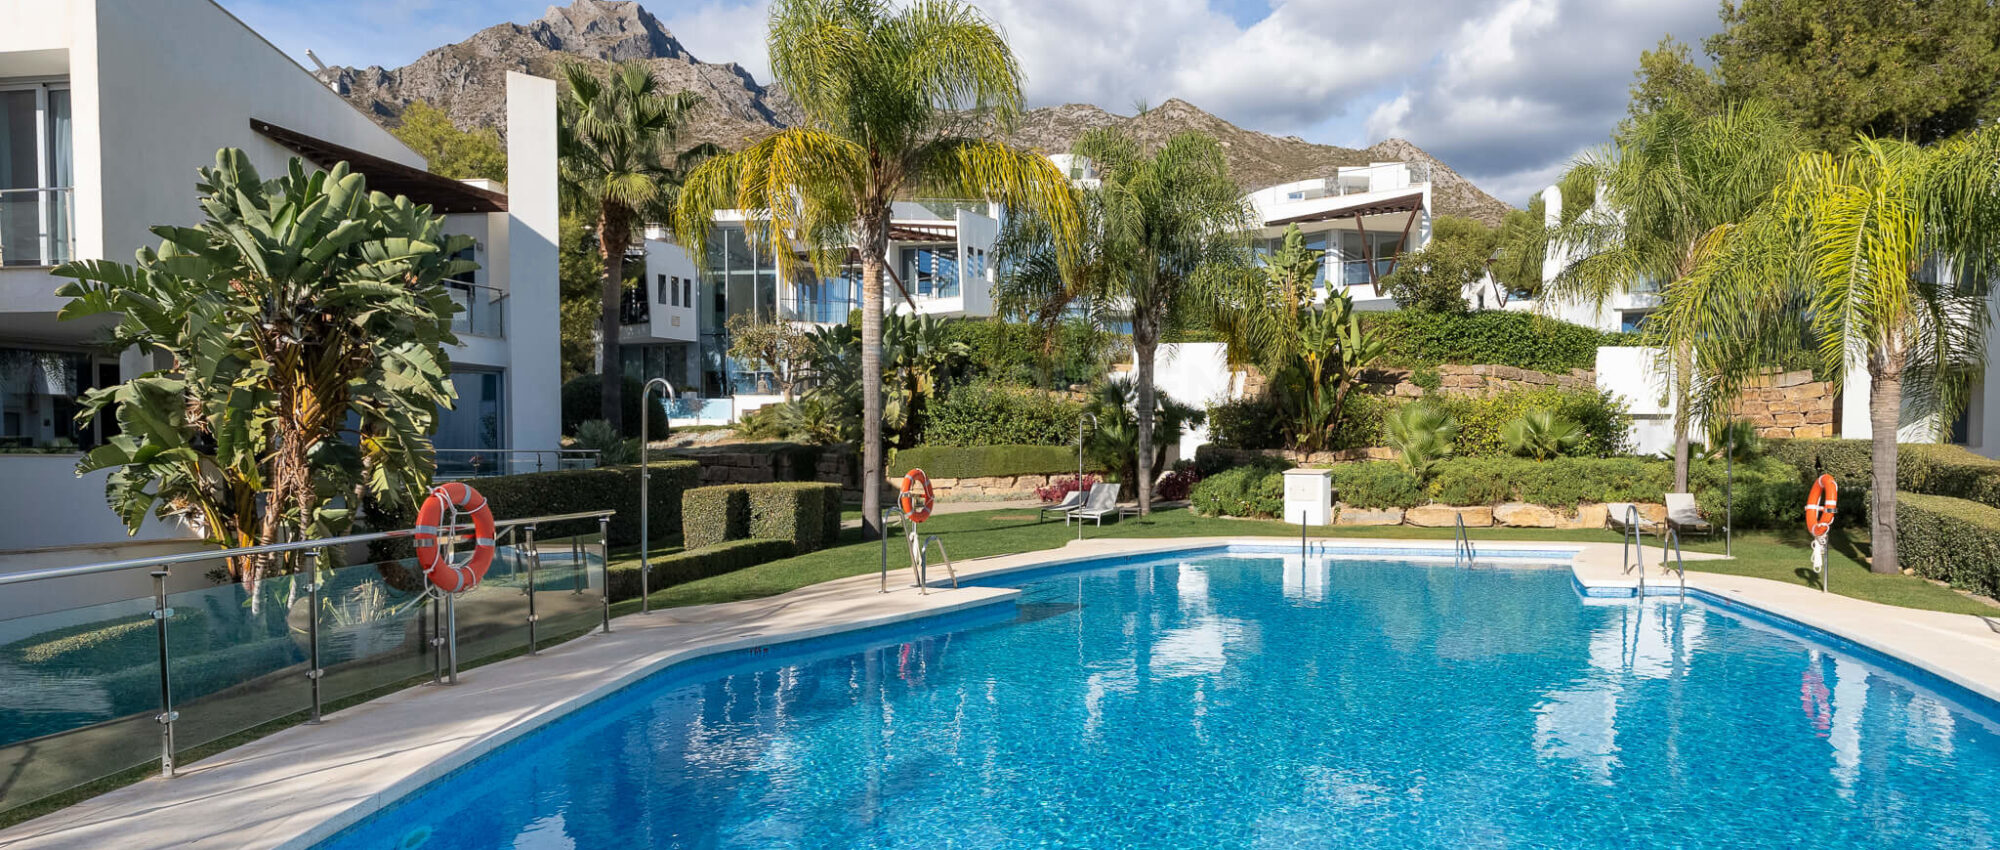 Spacious luxury townhouse with stunning views of Marbella in Sierra Blanca